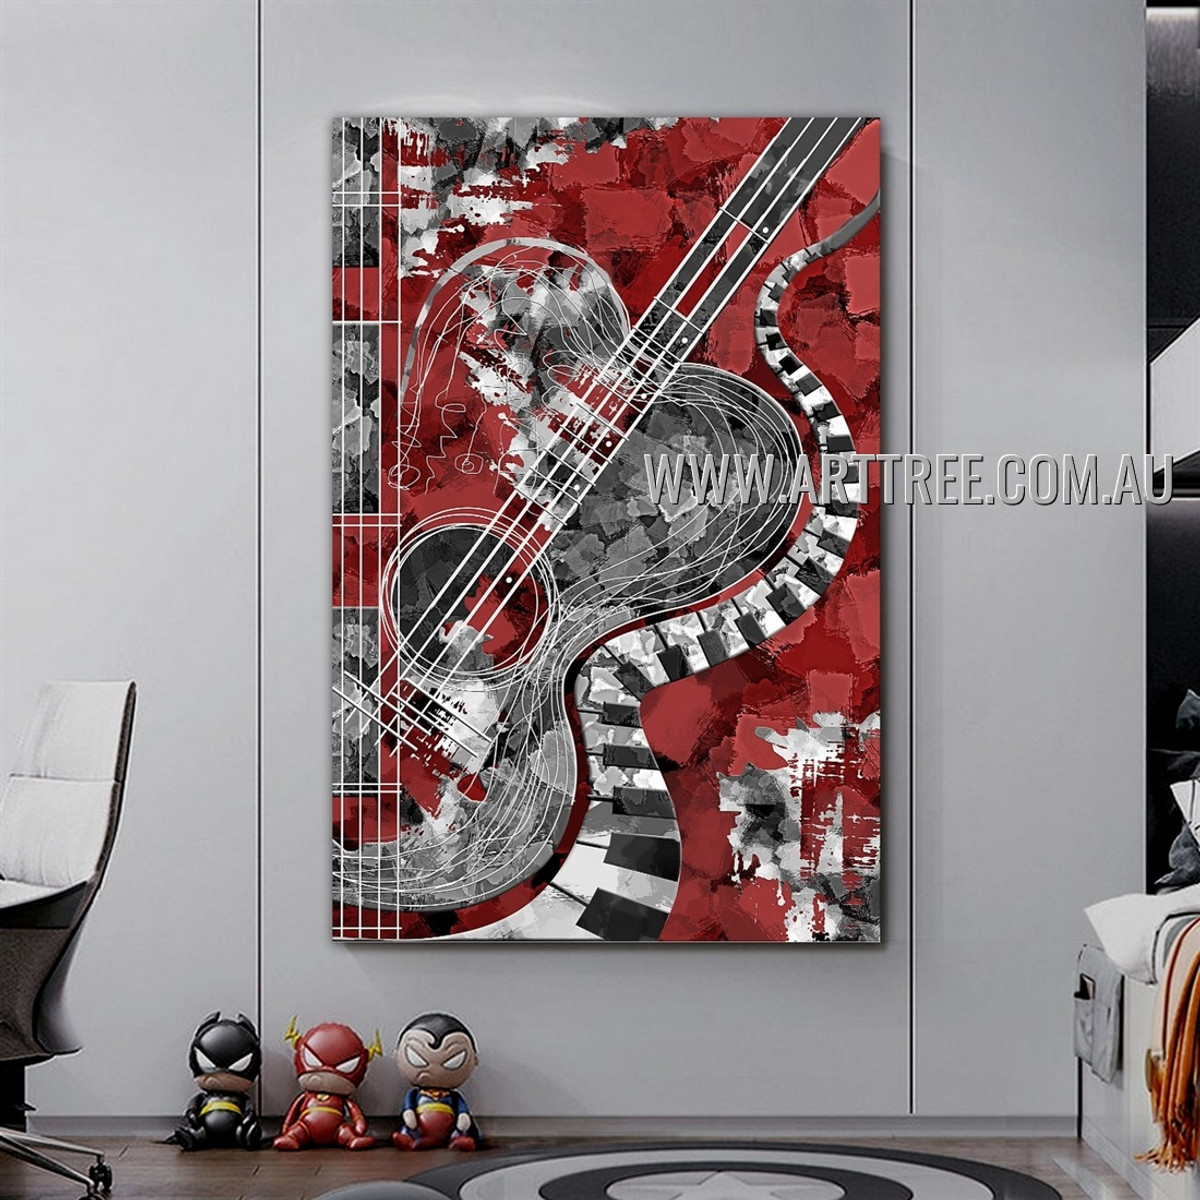 Piano Keys Abstract Artist Handmade Heavy Texture Framed Contemporary Art Painting For Room Wall Adornment